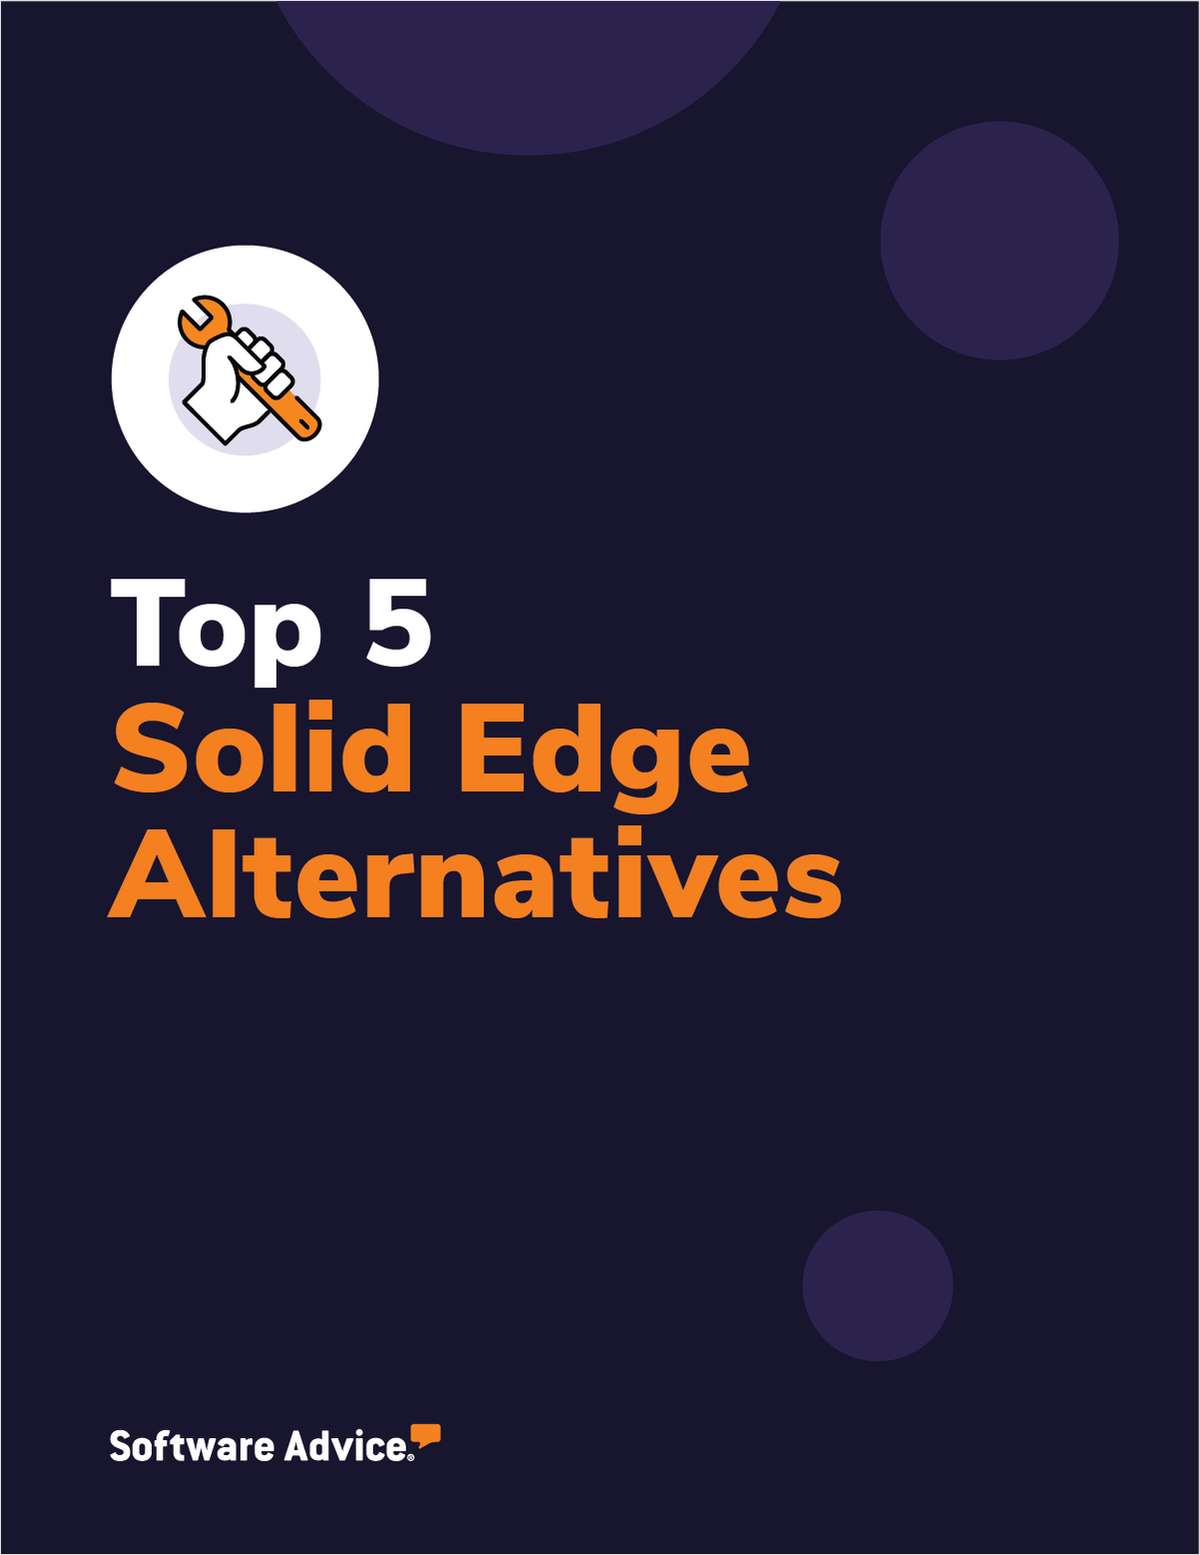 Top 4 Solid Edge Alternatives